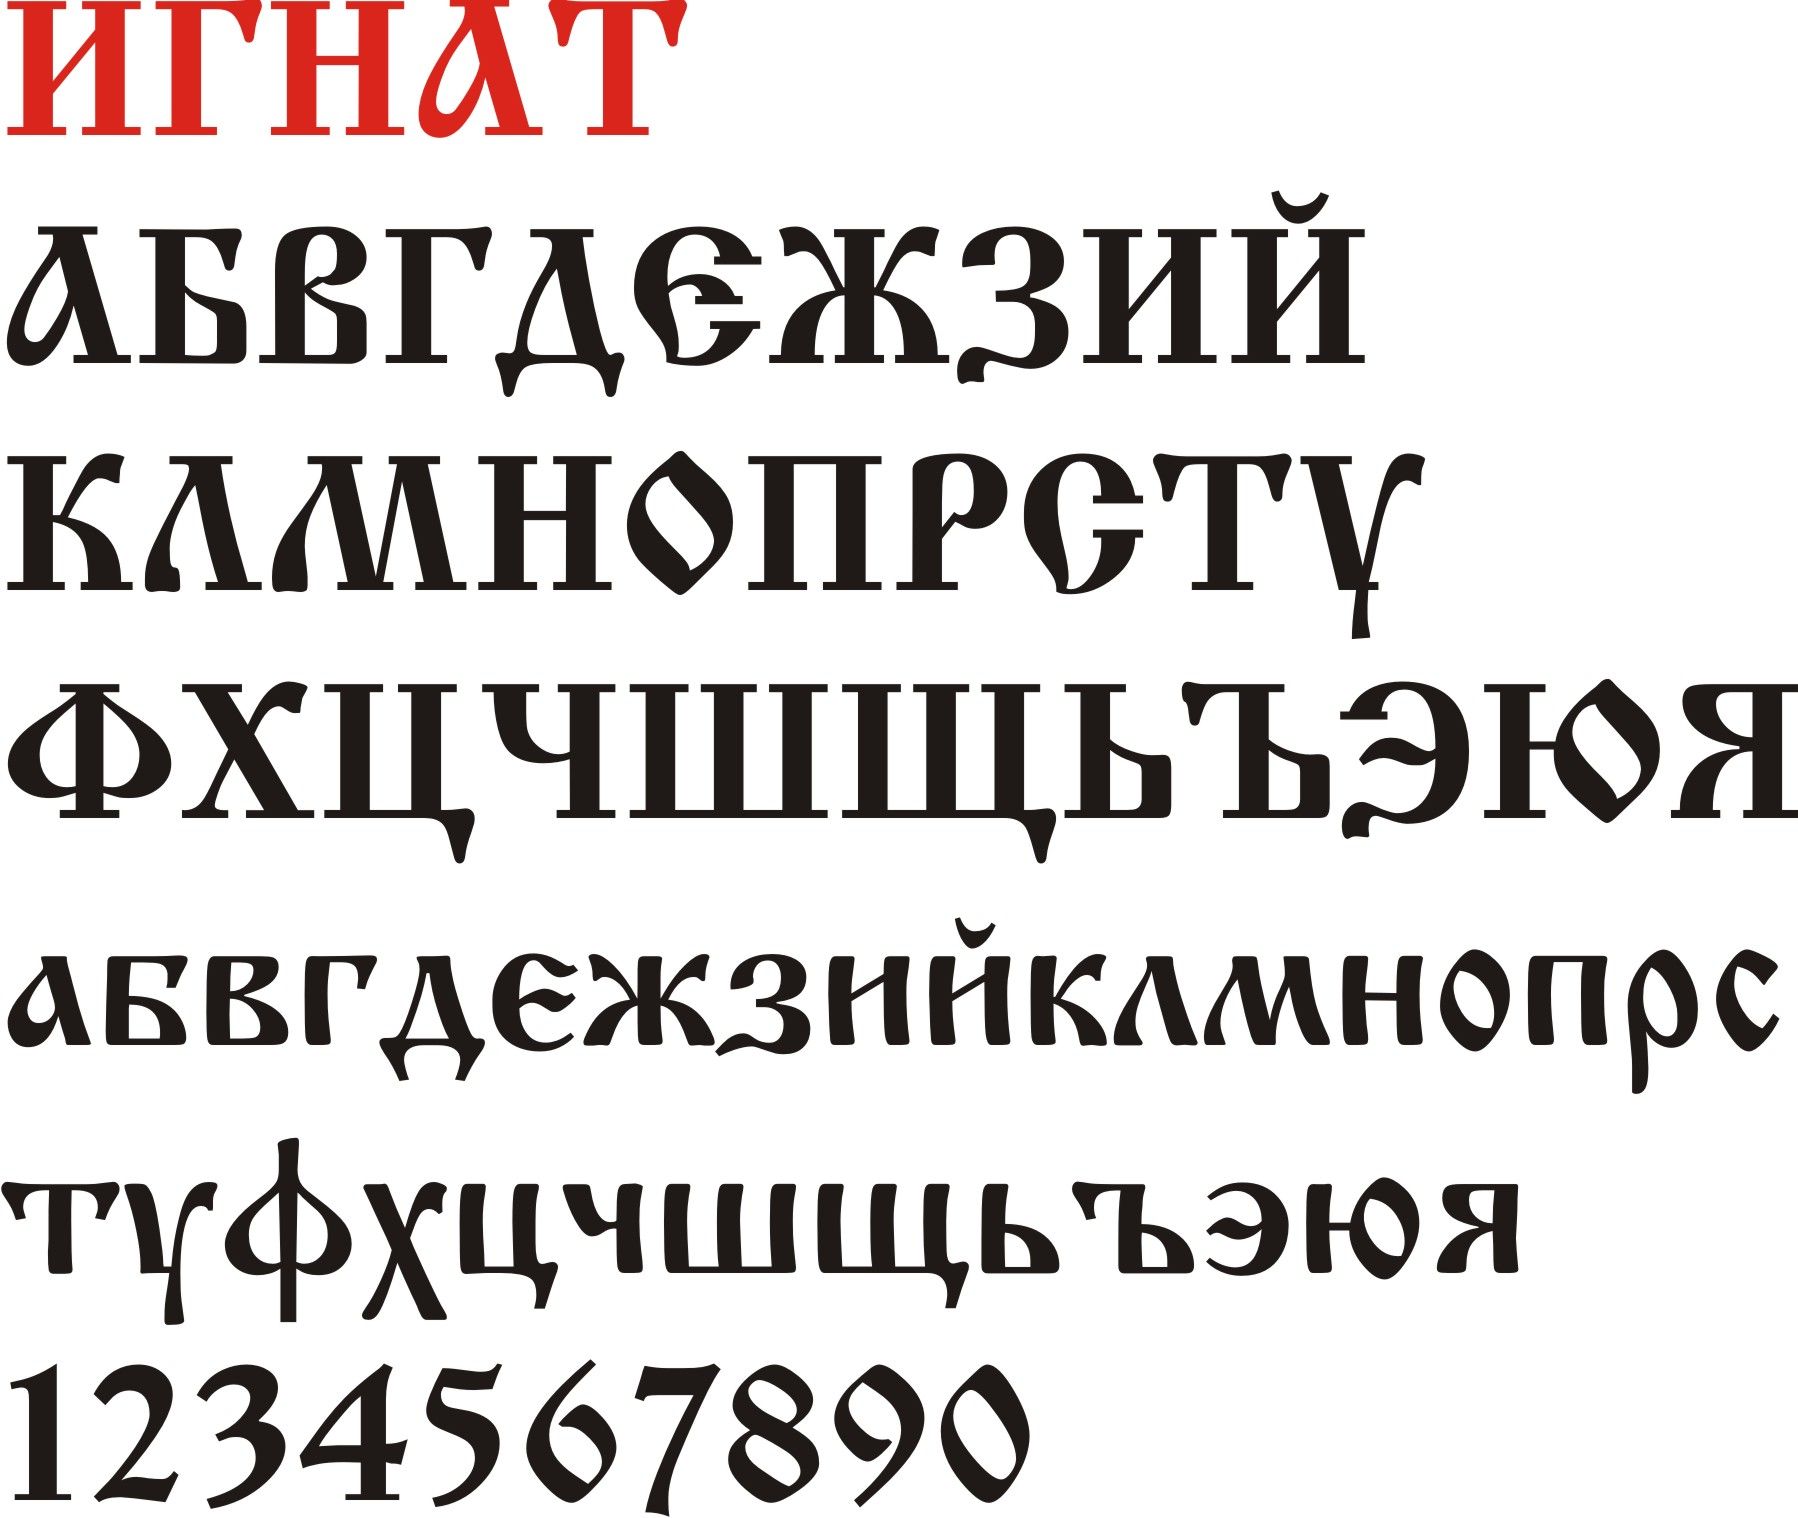 russian cyrillic font